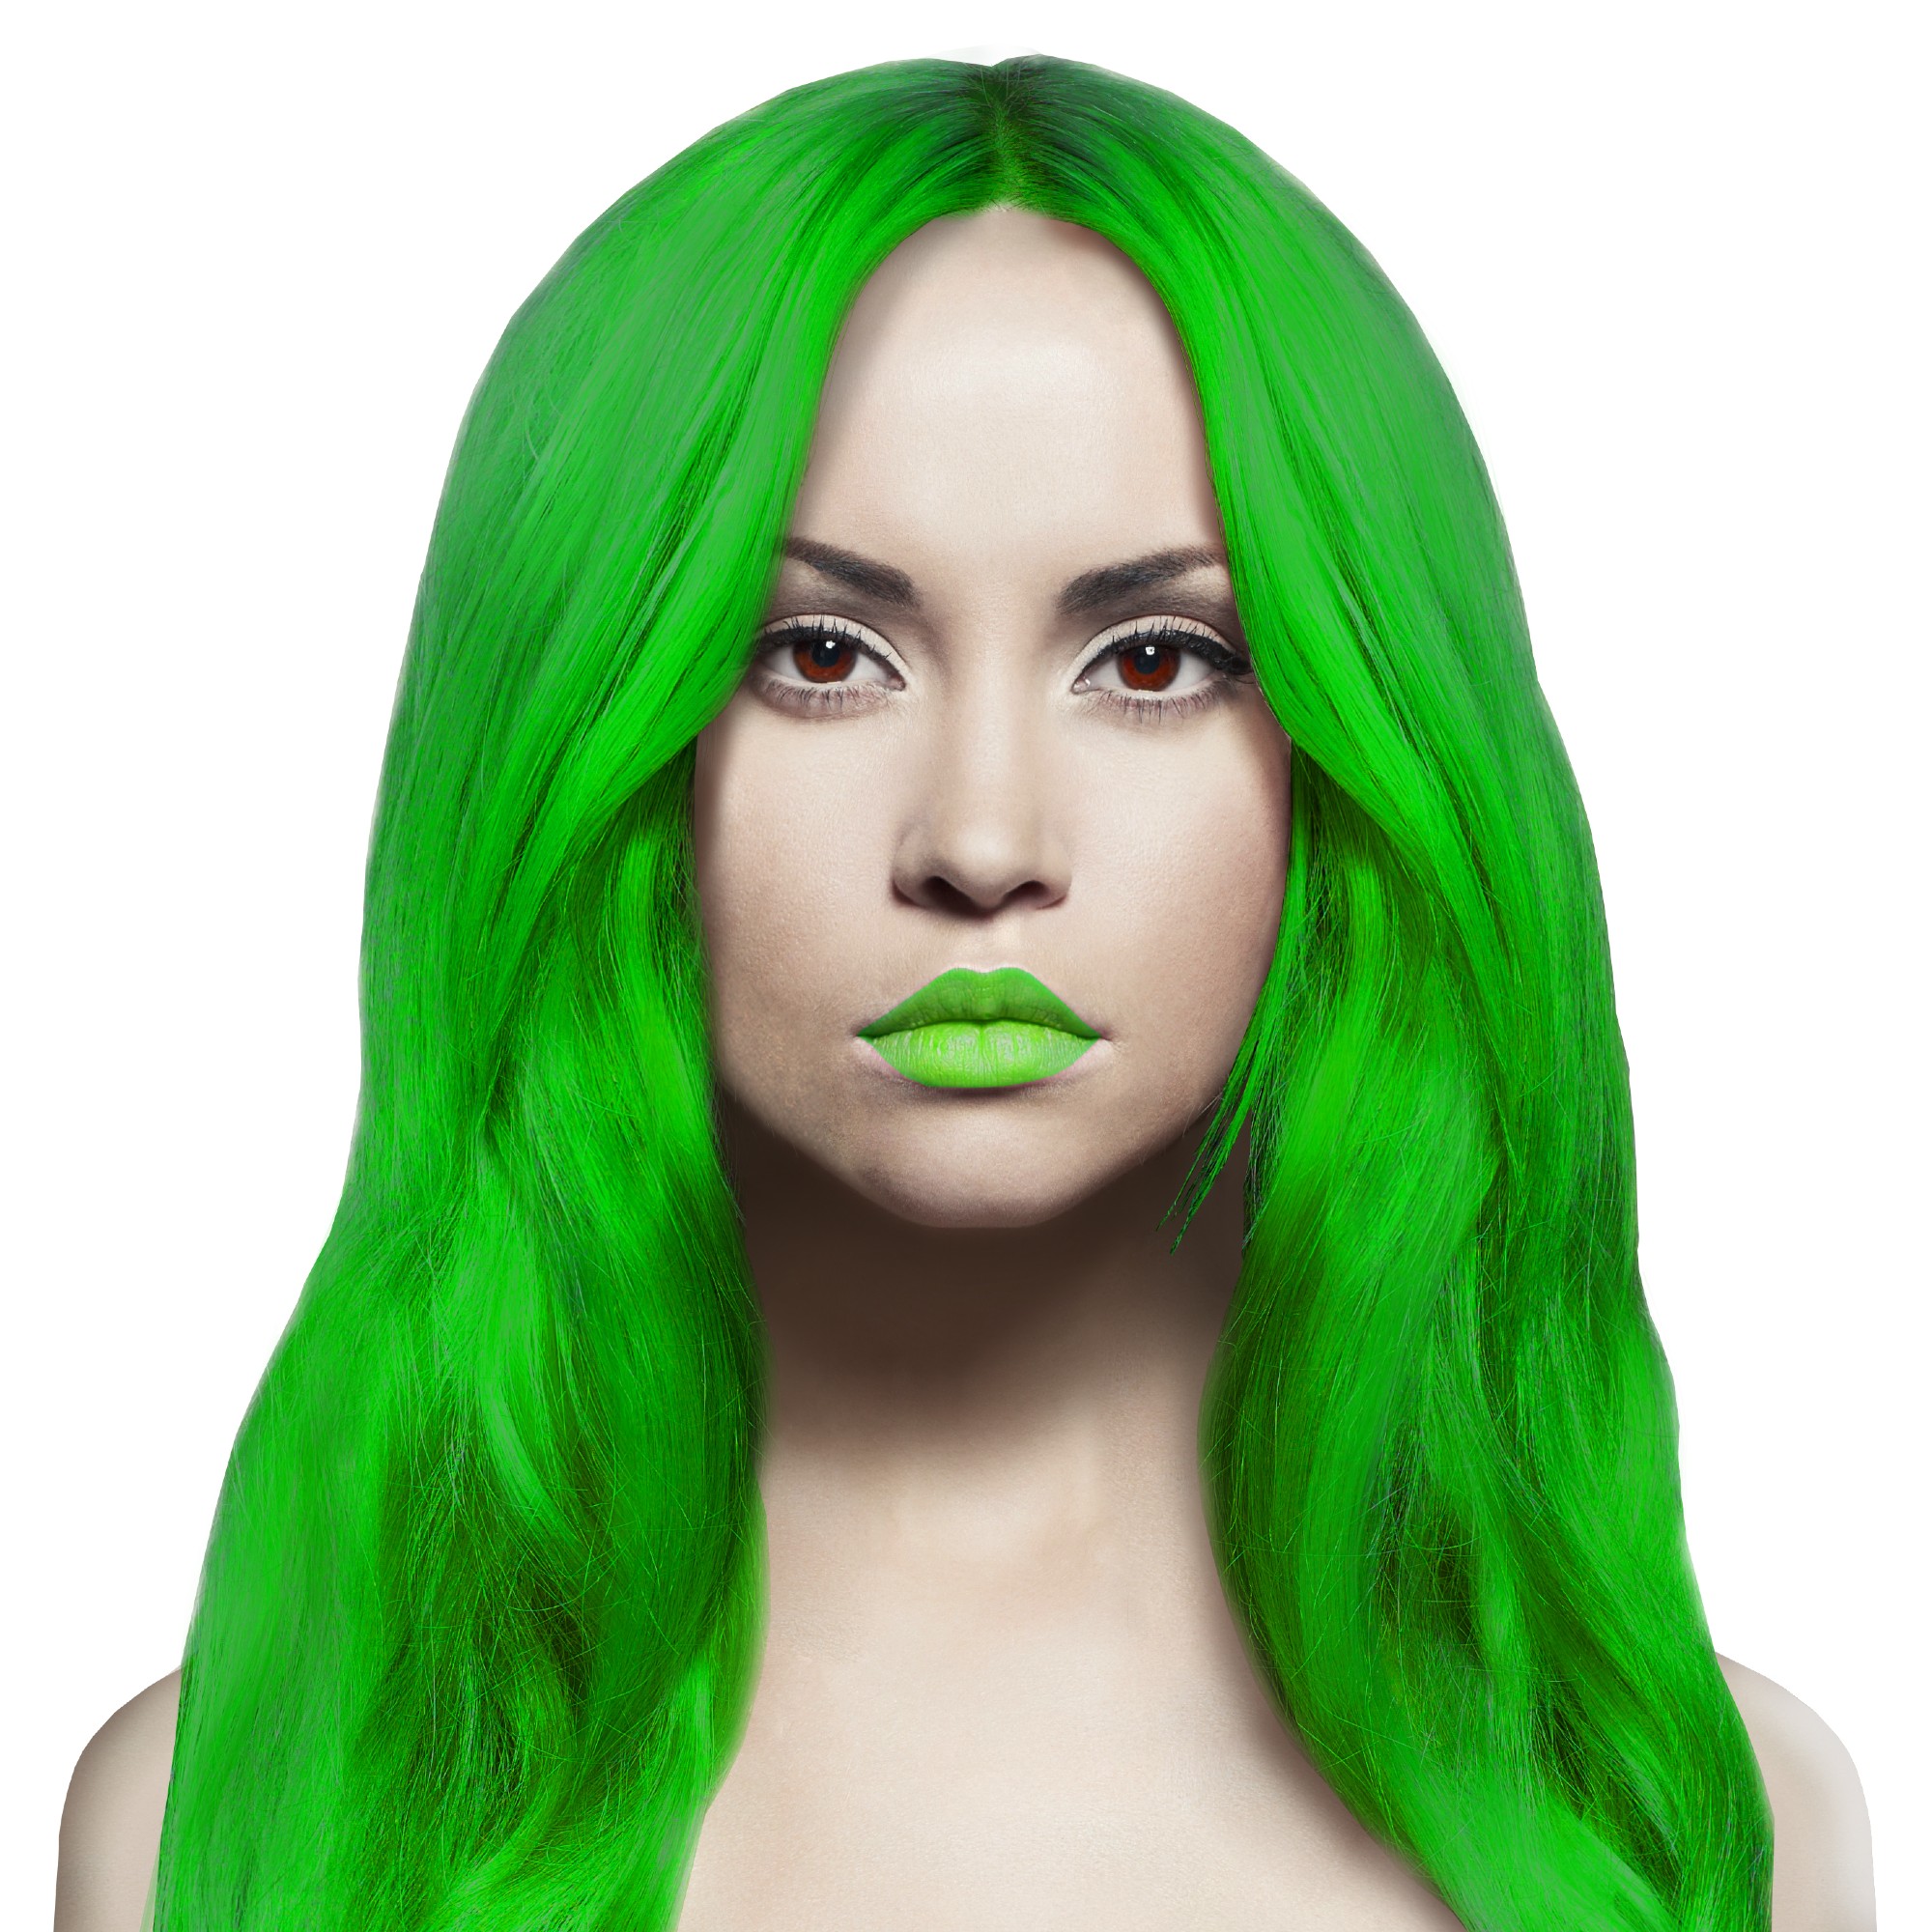 Neon grüne haare